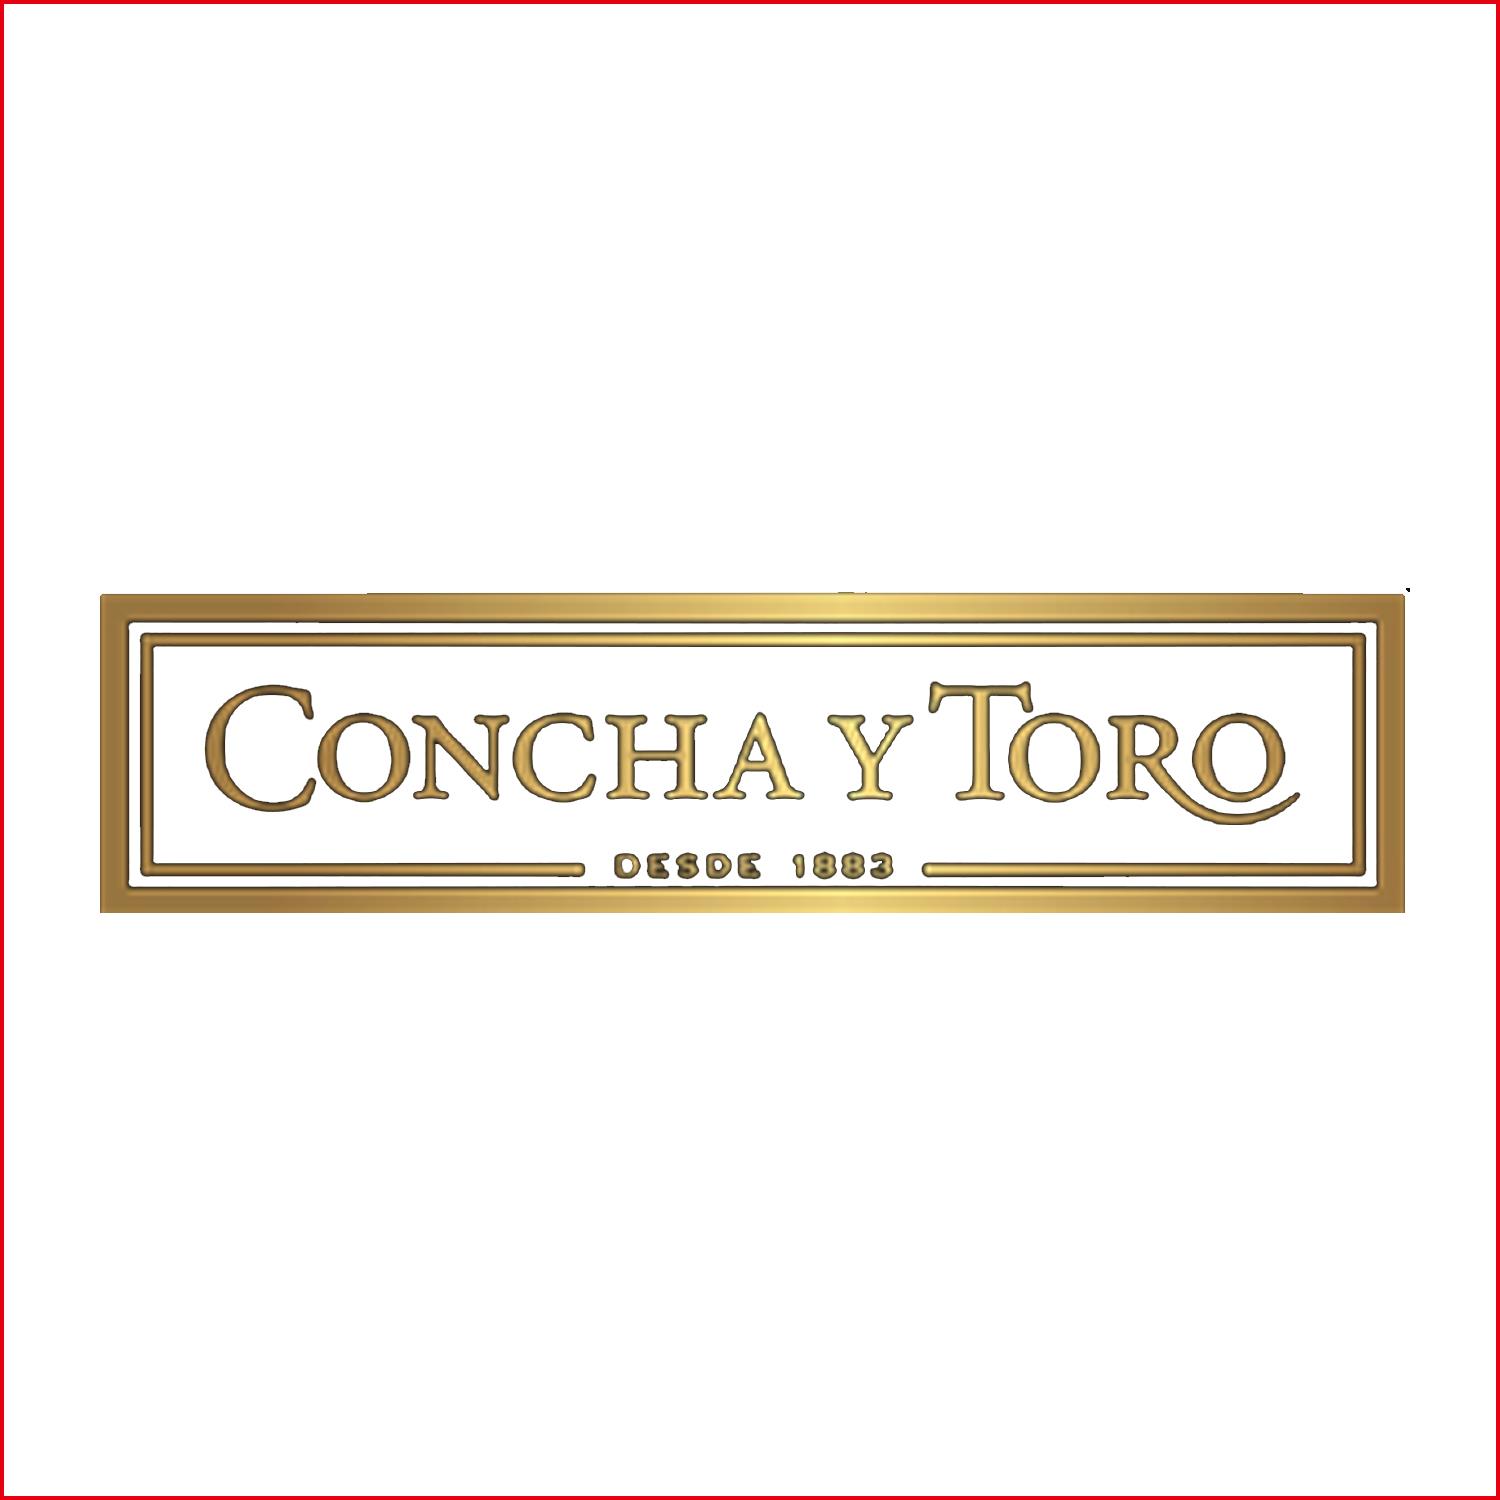 孔雀酒廠 Vina Concha y Toro